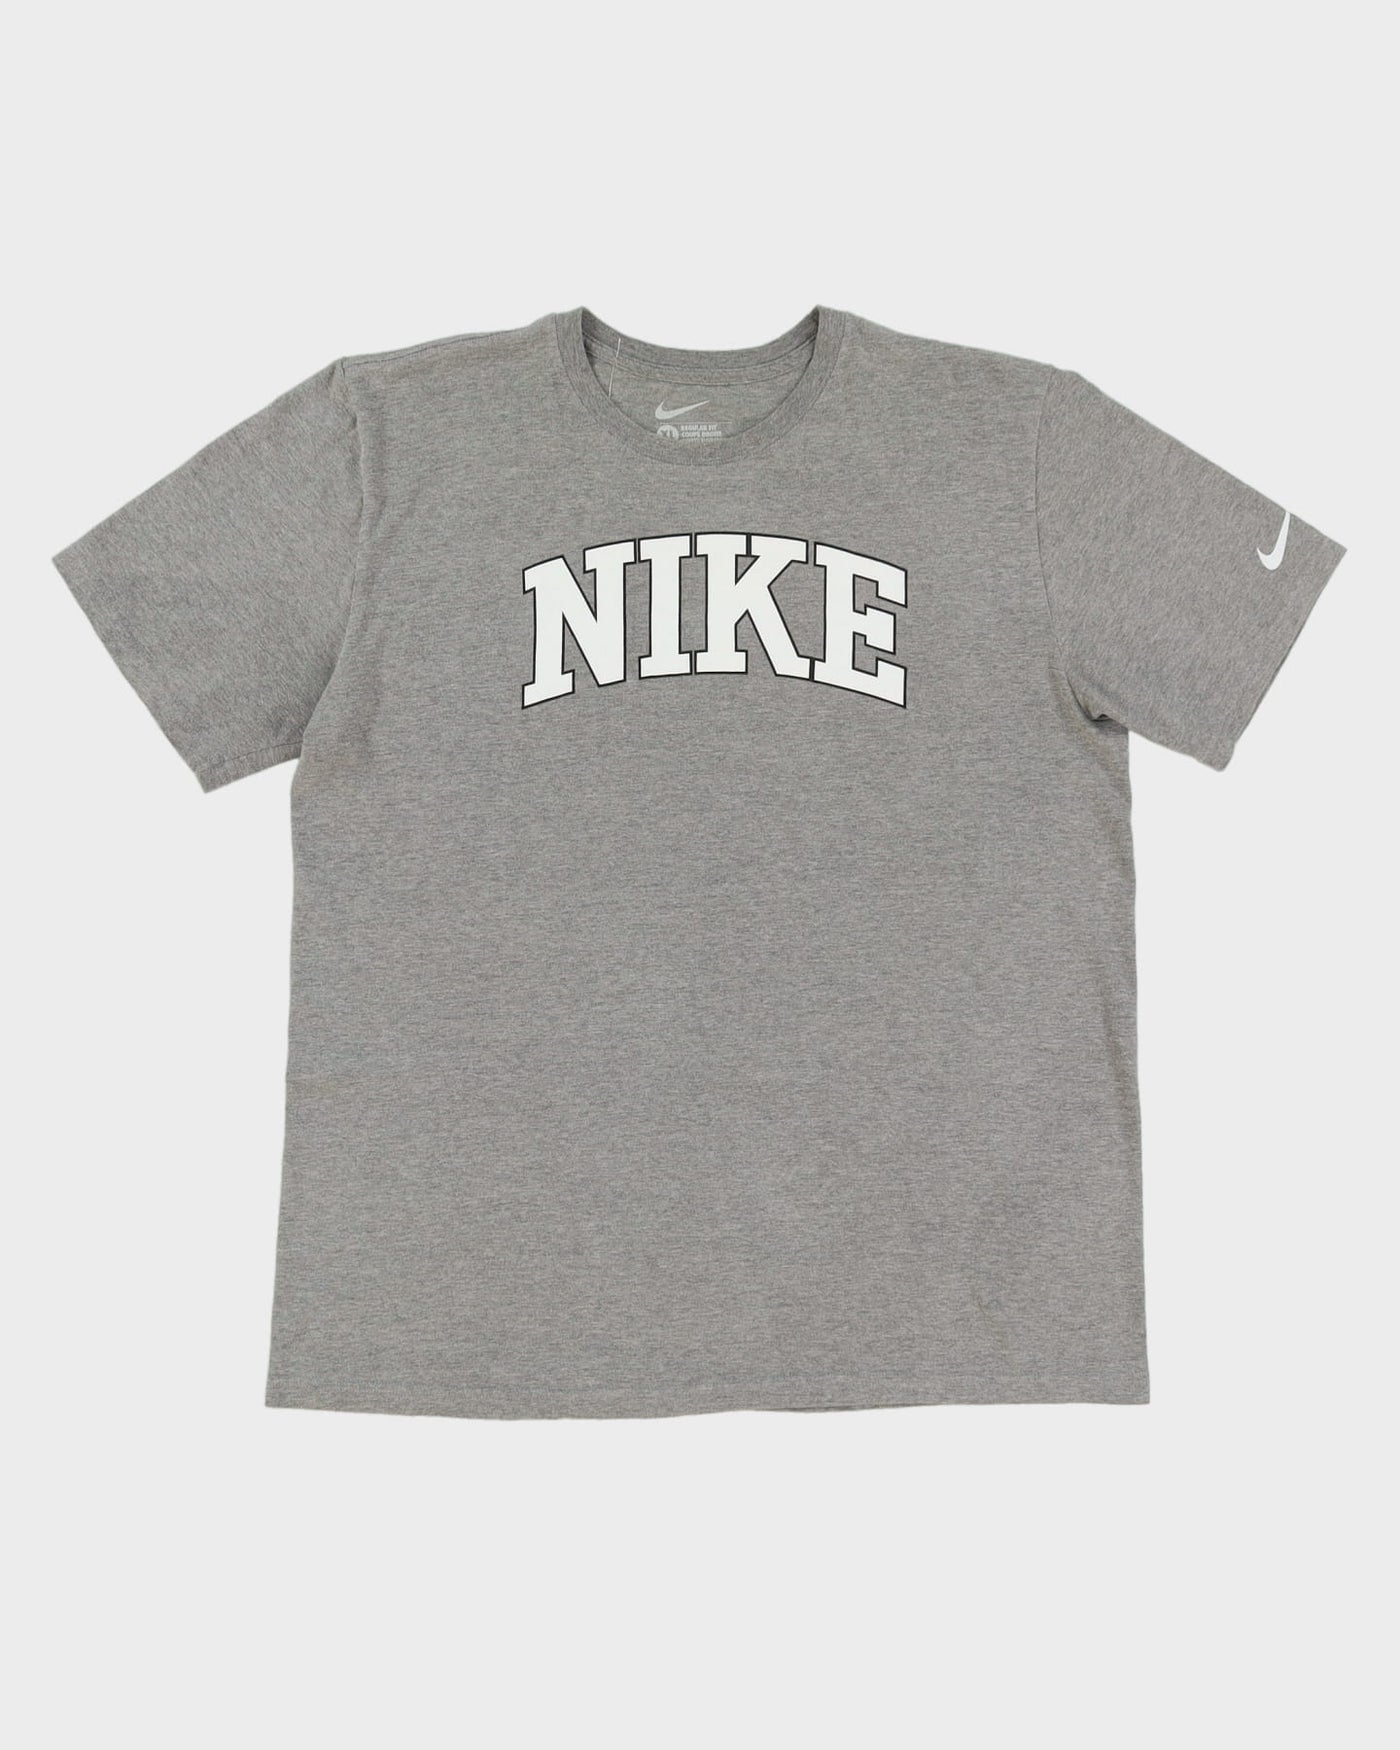 Nike Grey Big Logo T Shirt - XL